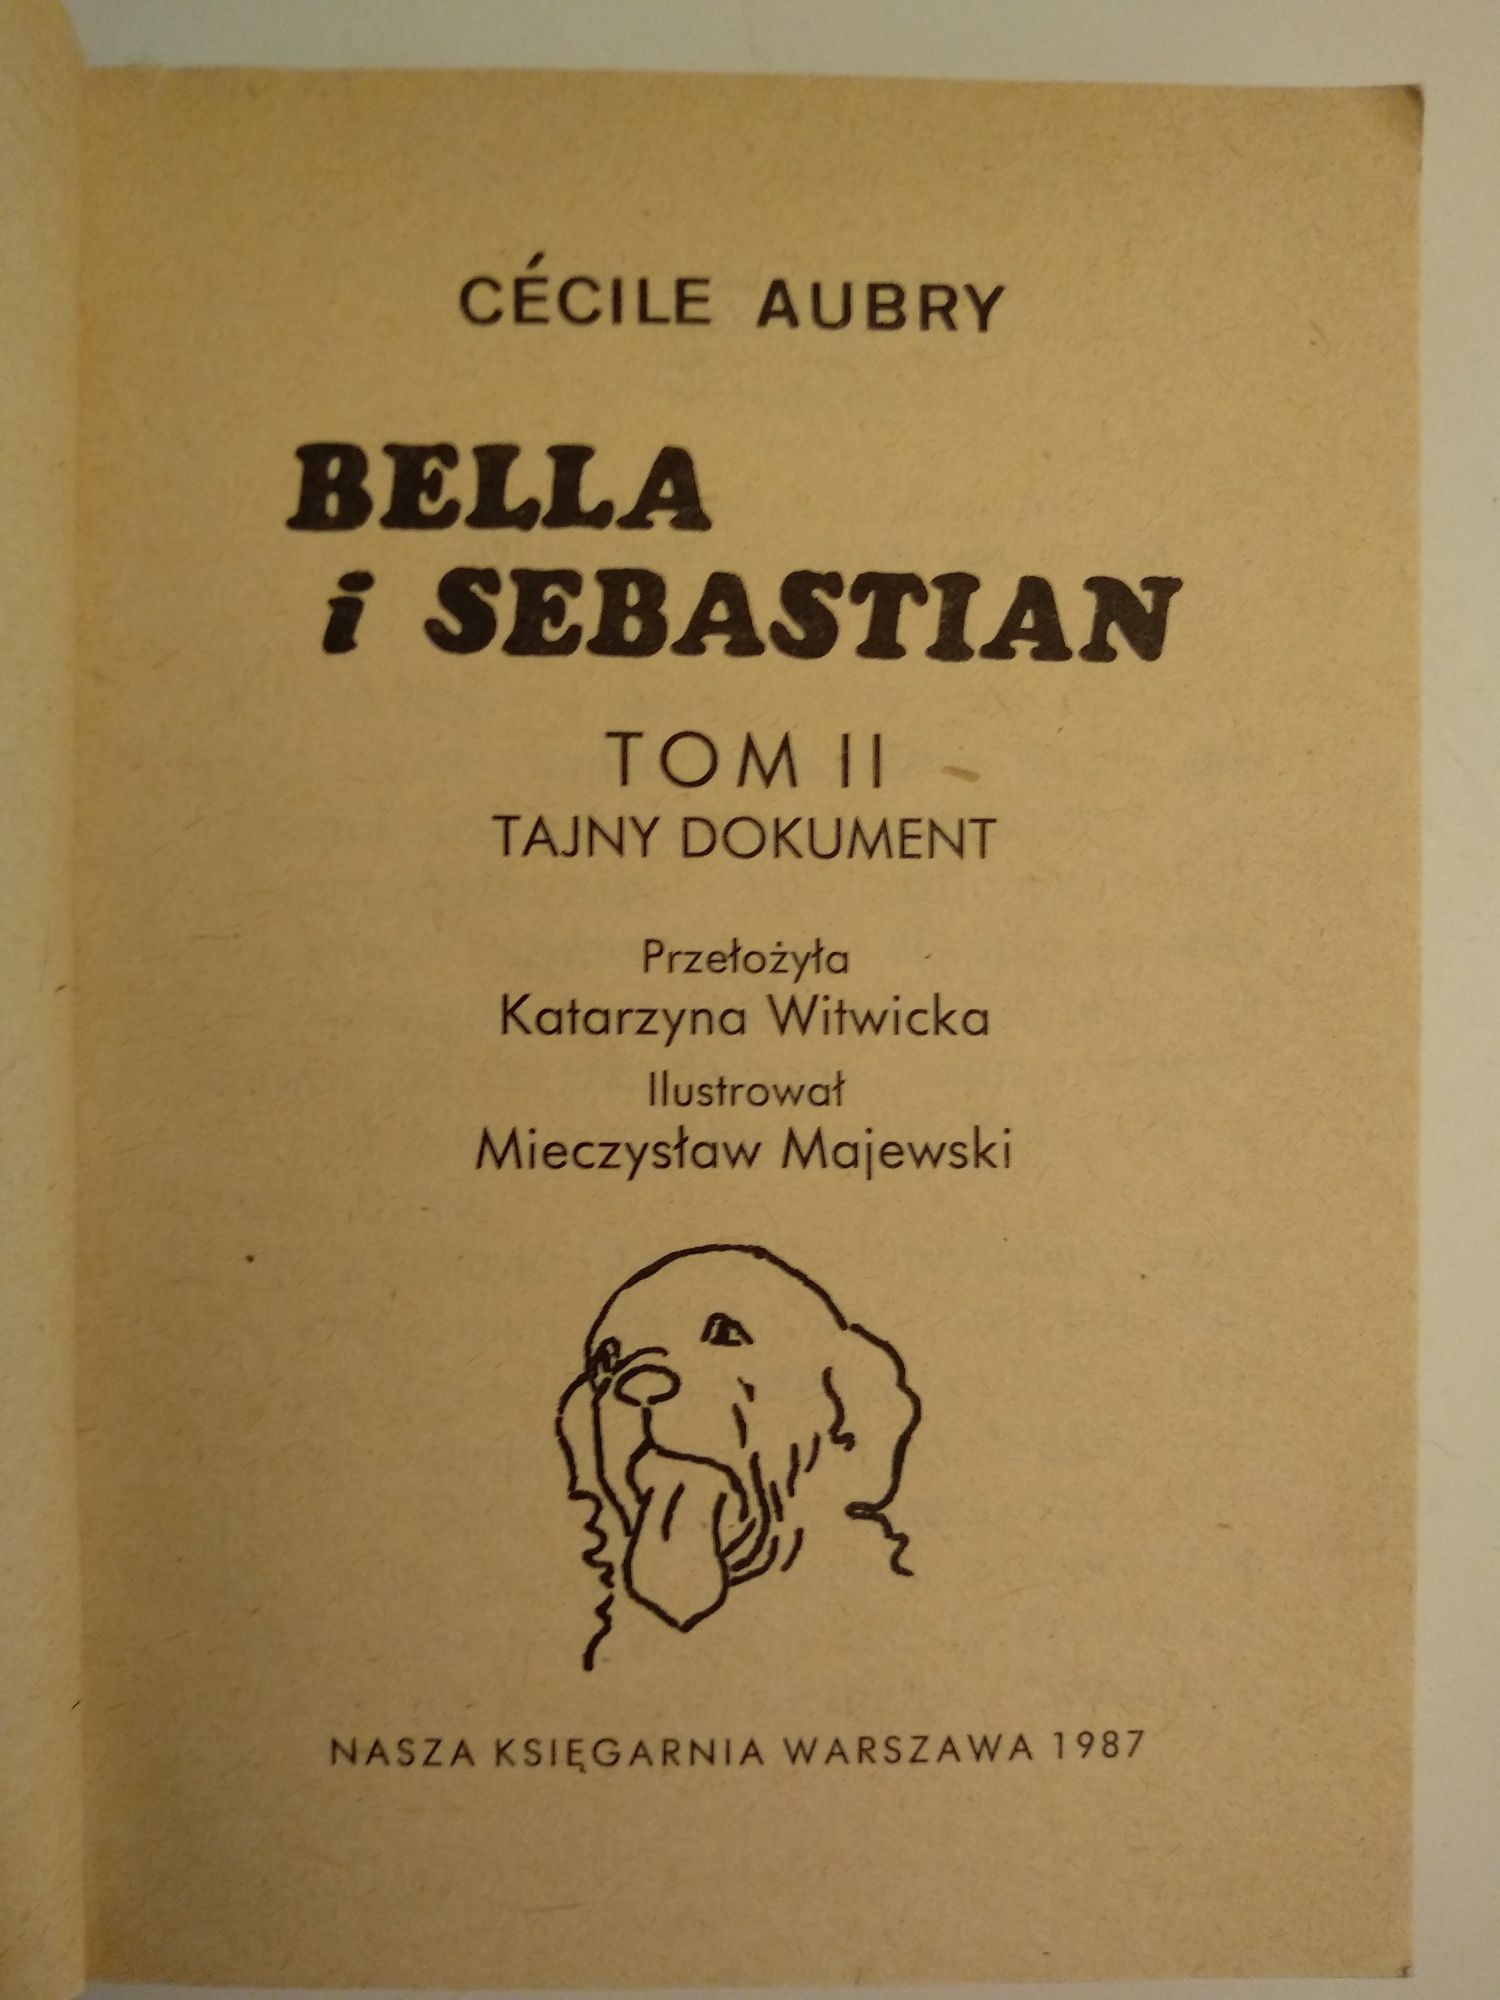 Bella i Sebastian - Cécile Aubry - tom II